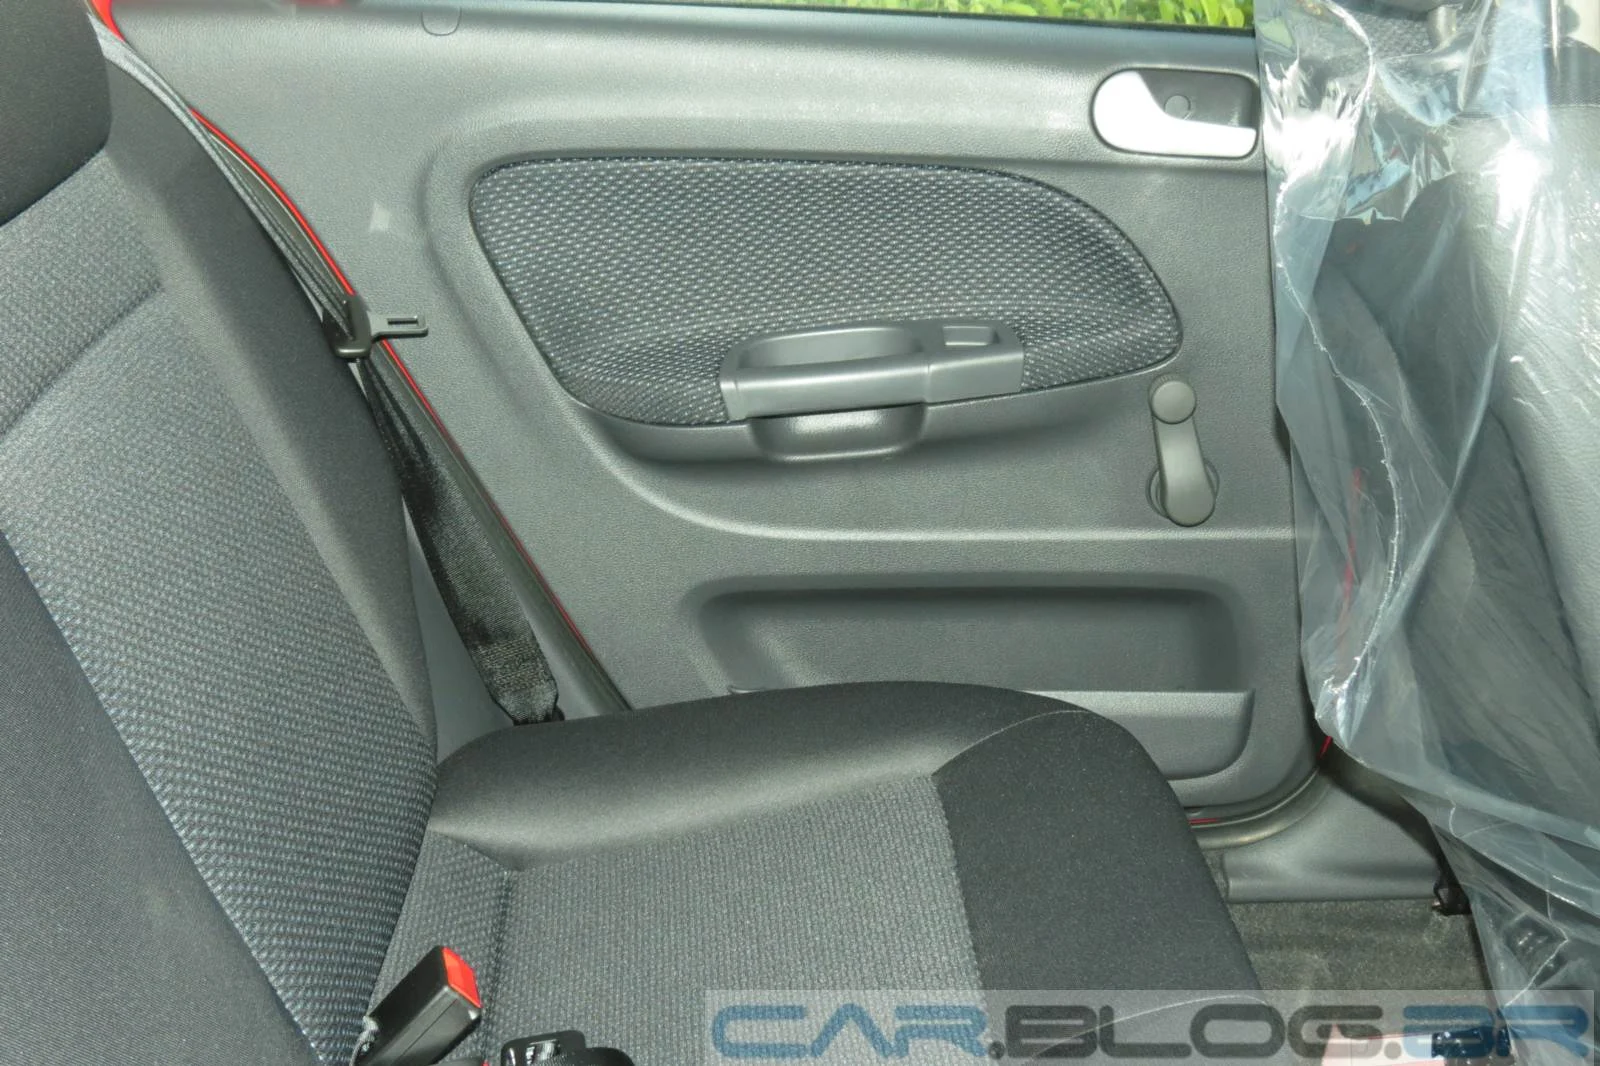 VW Gol Trendline MSI 2015 - interior